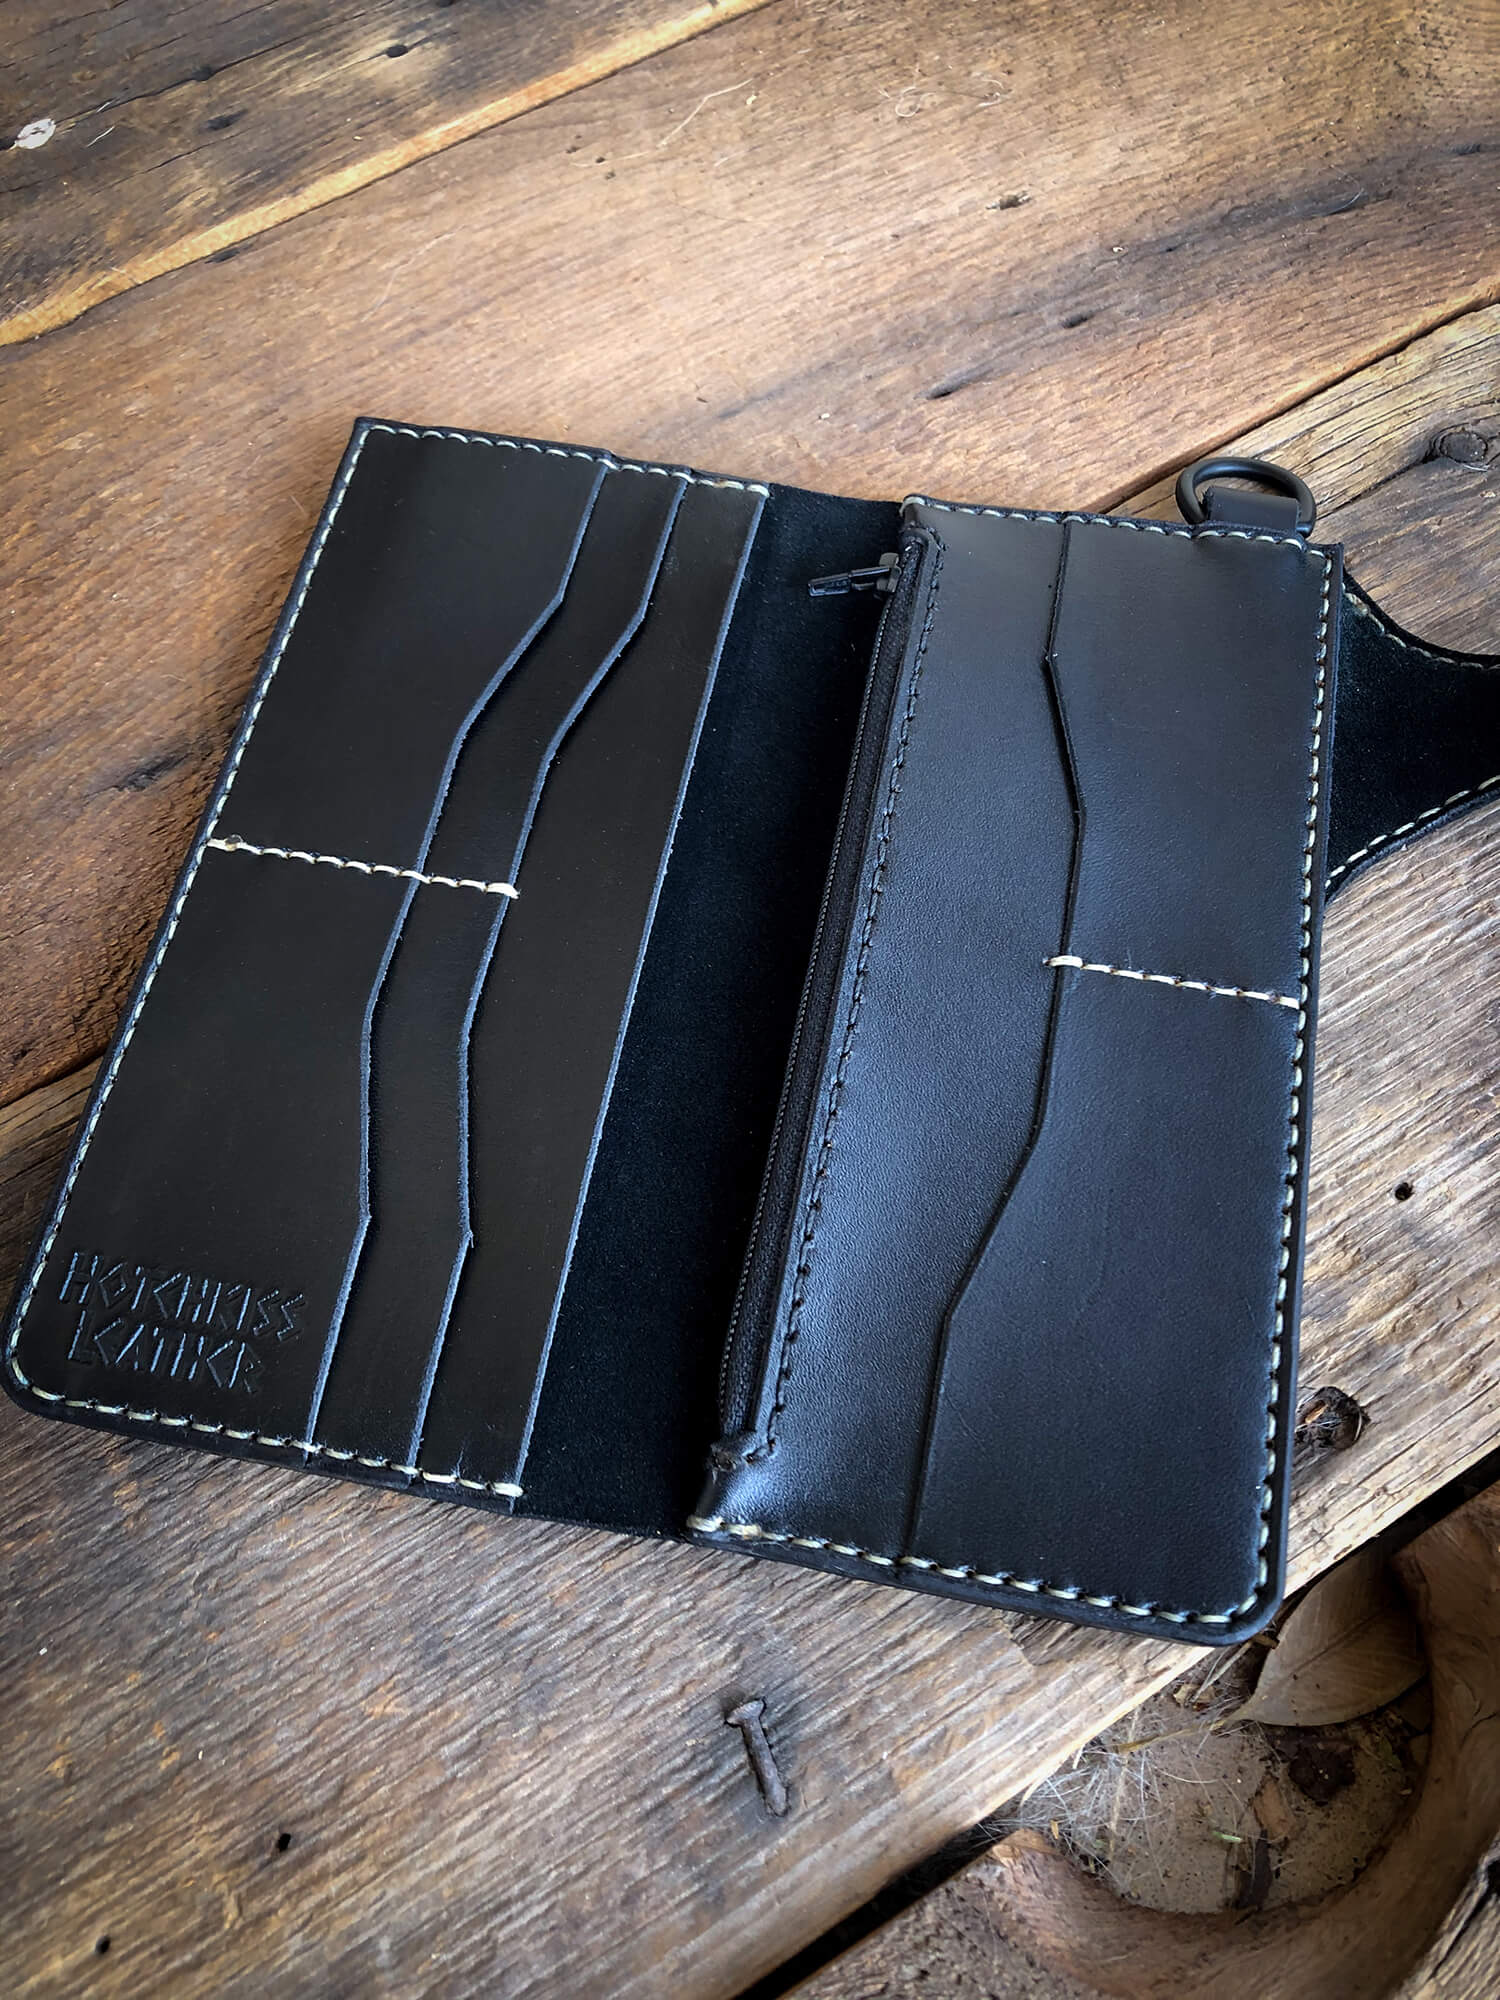 Hotchkiss Leather Subjugation Custom Leather Monster Wallet